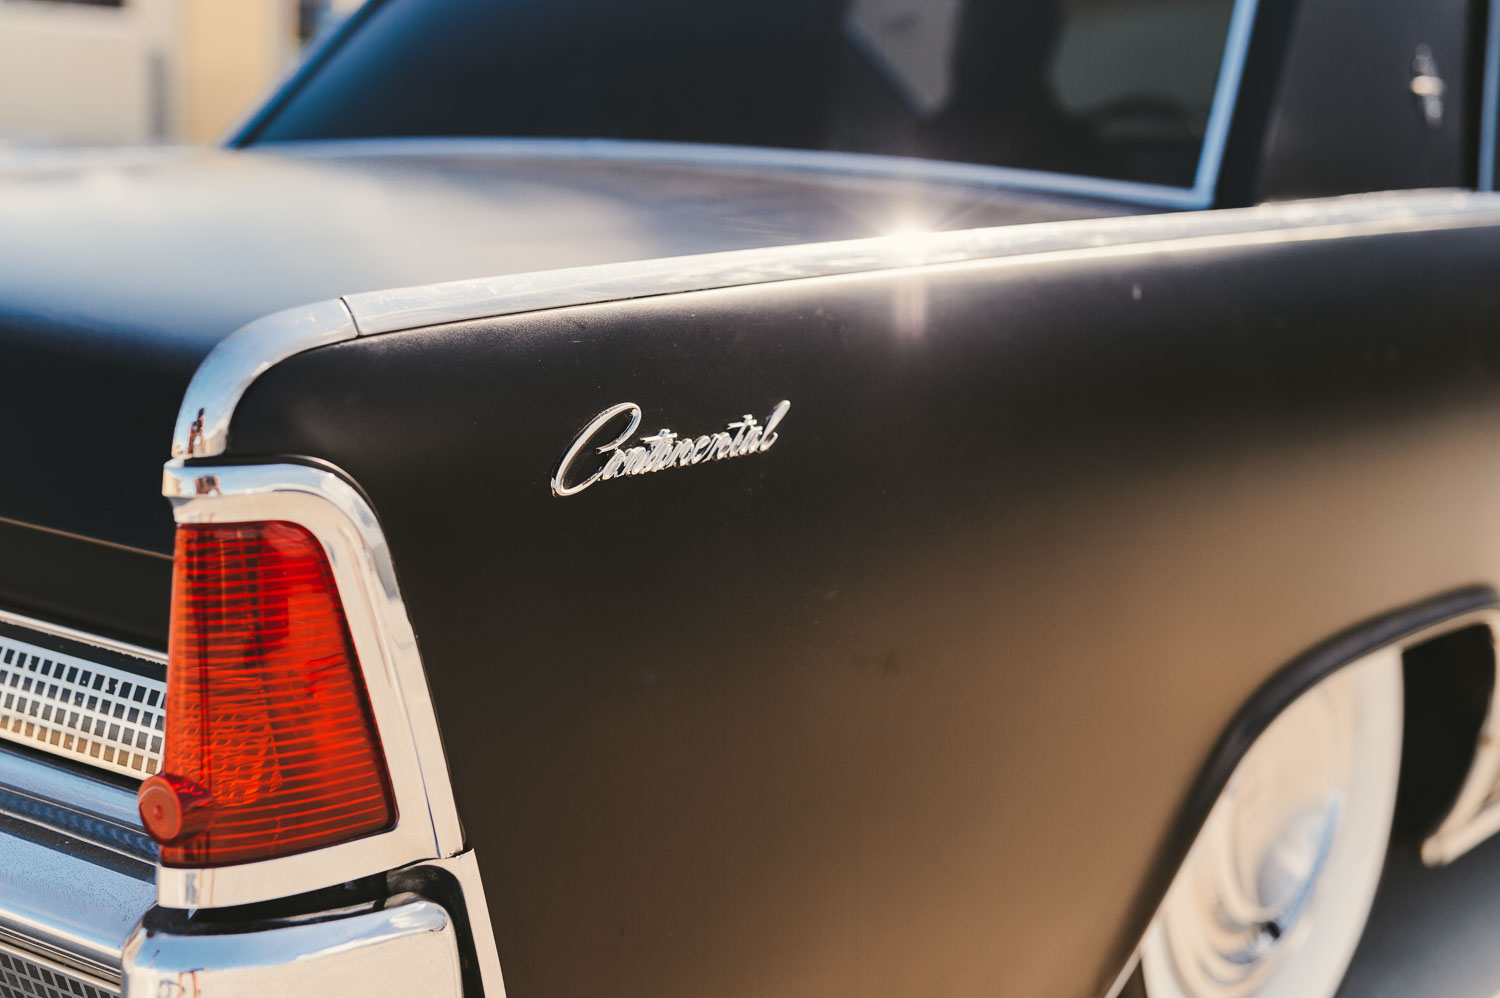 Closeup of Chevrolet logo on side of black car